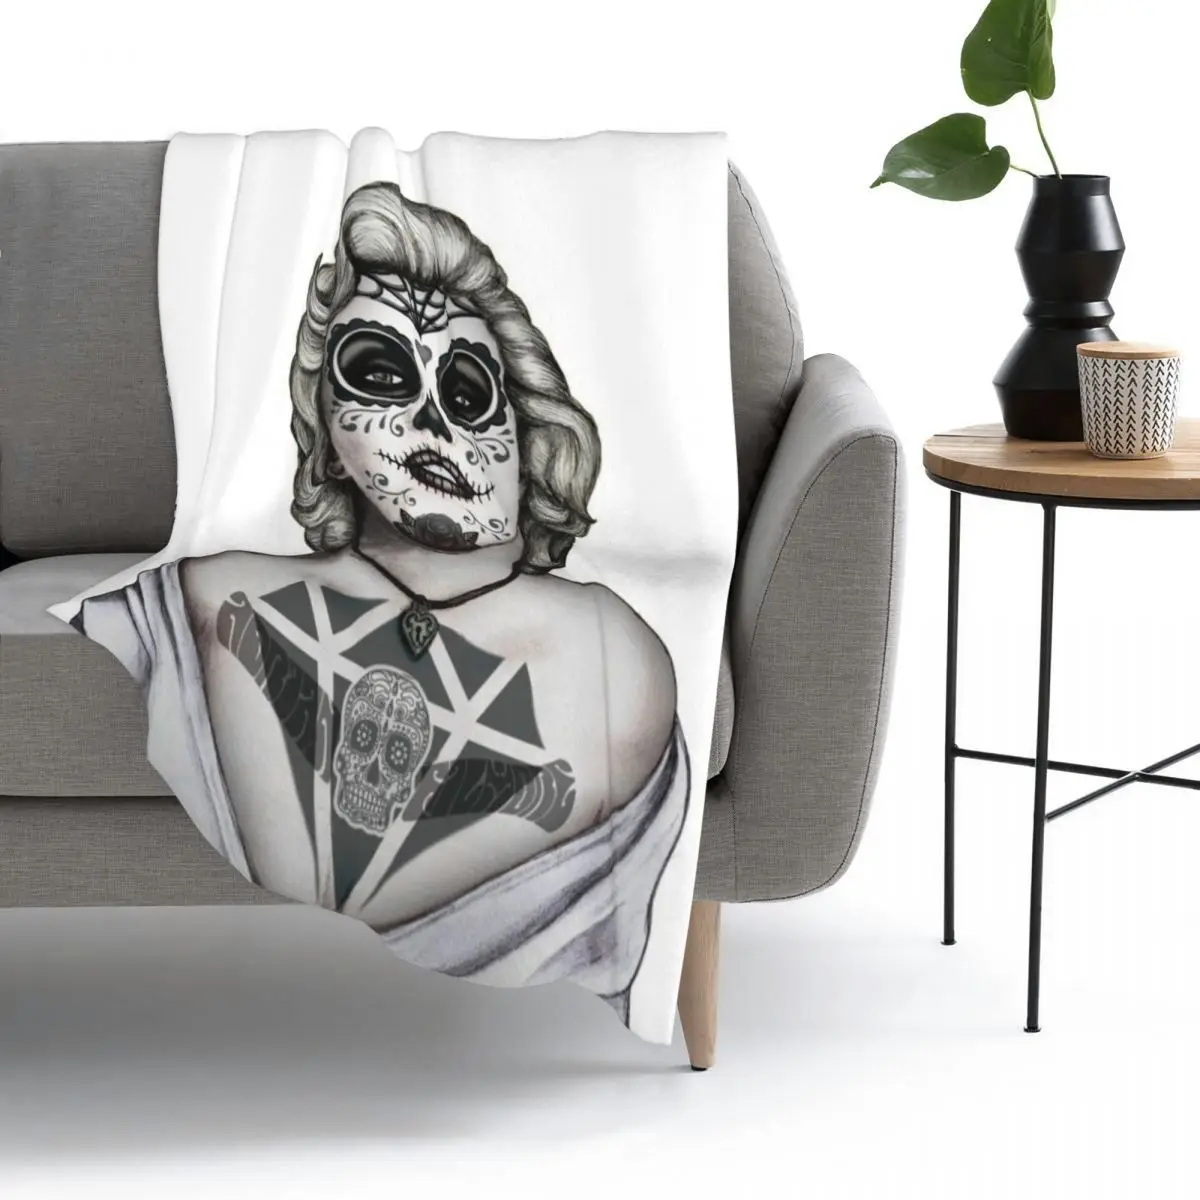 

Skull Marilyn Monroe Throw Blanket Bedspread Bed Blanket Sofa Blanket Plush Flannel Cozy bedclothes Home travel Adult child